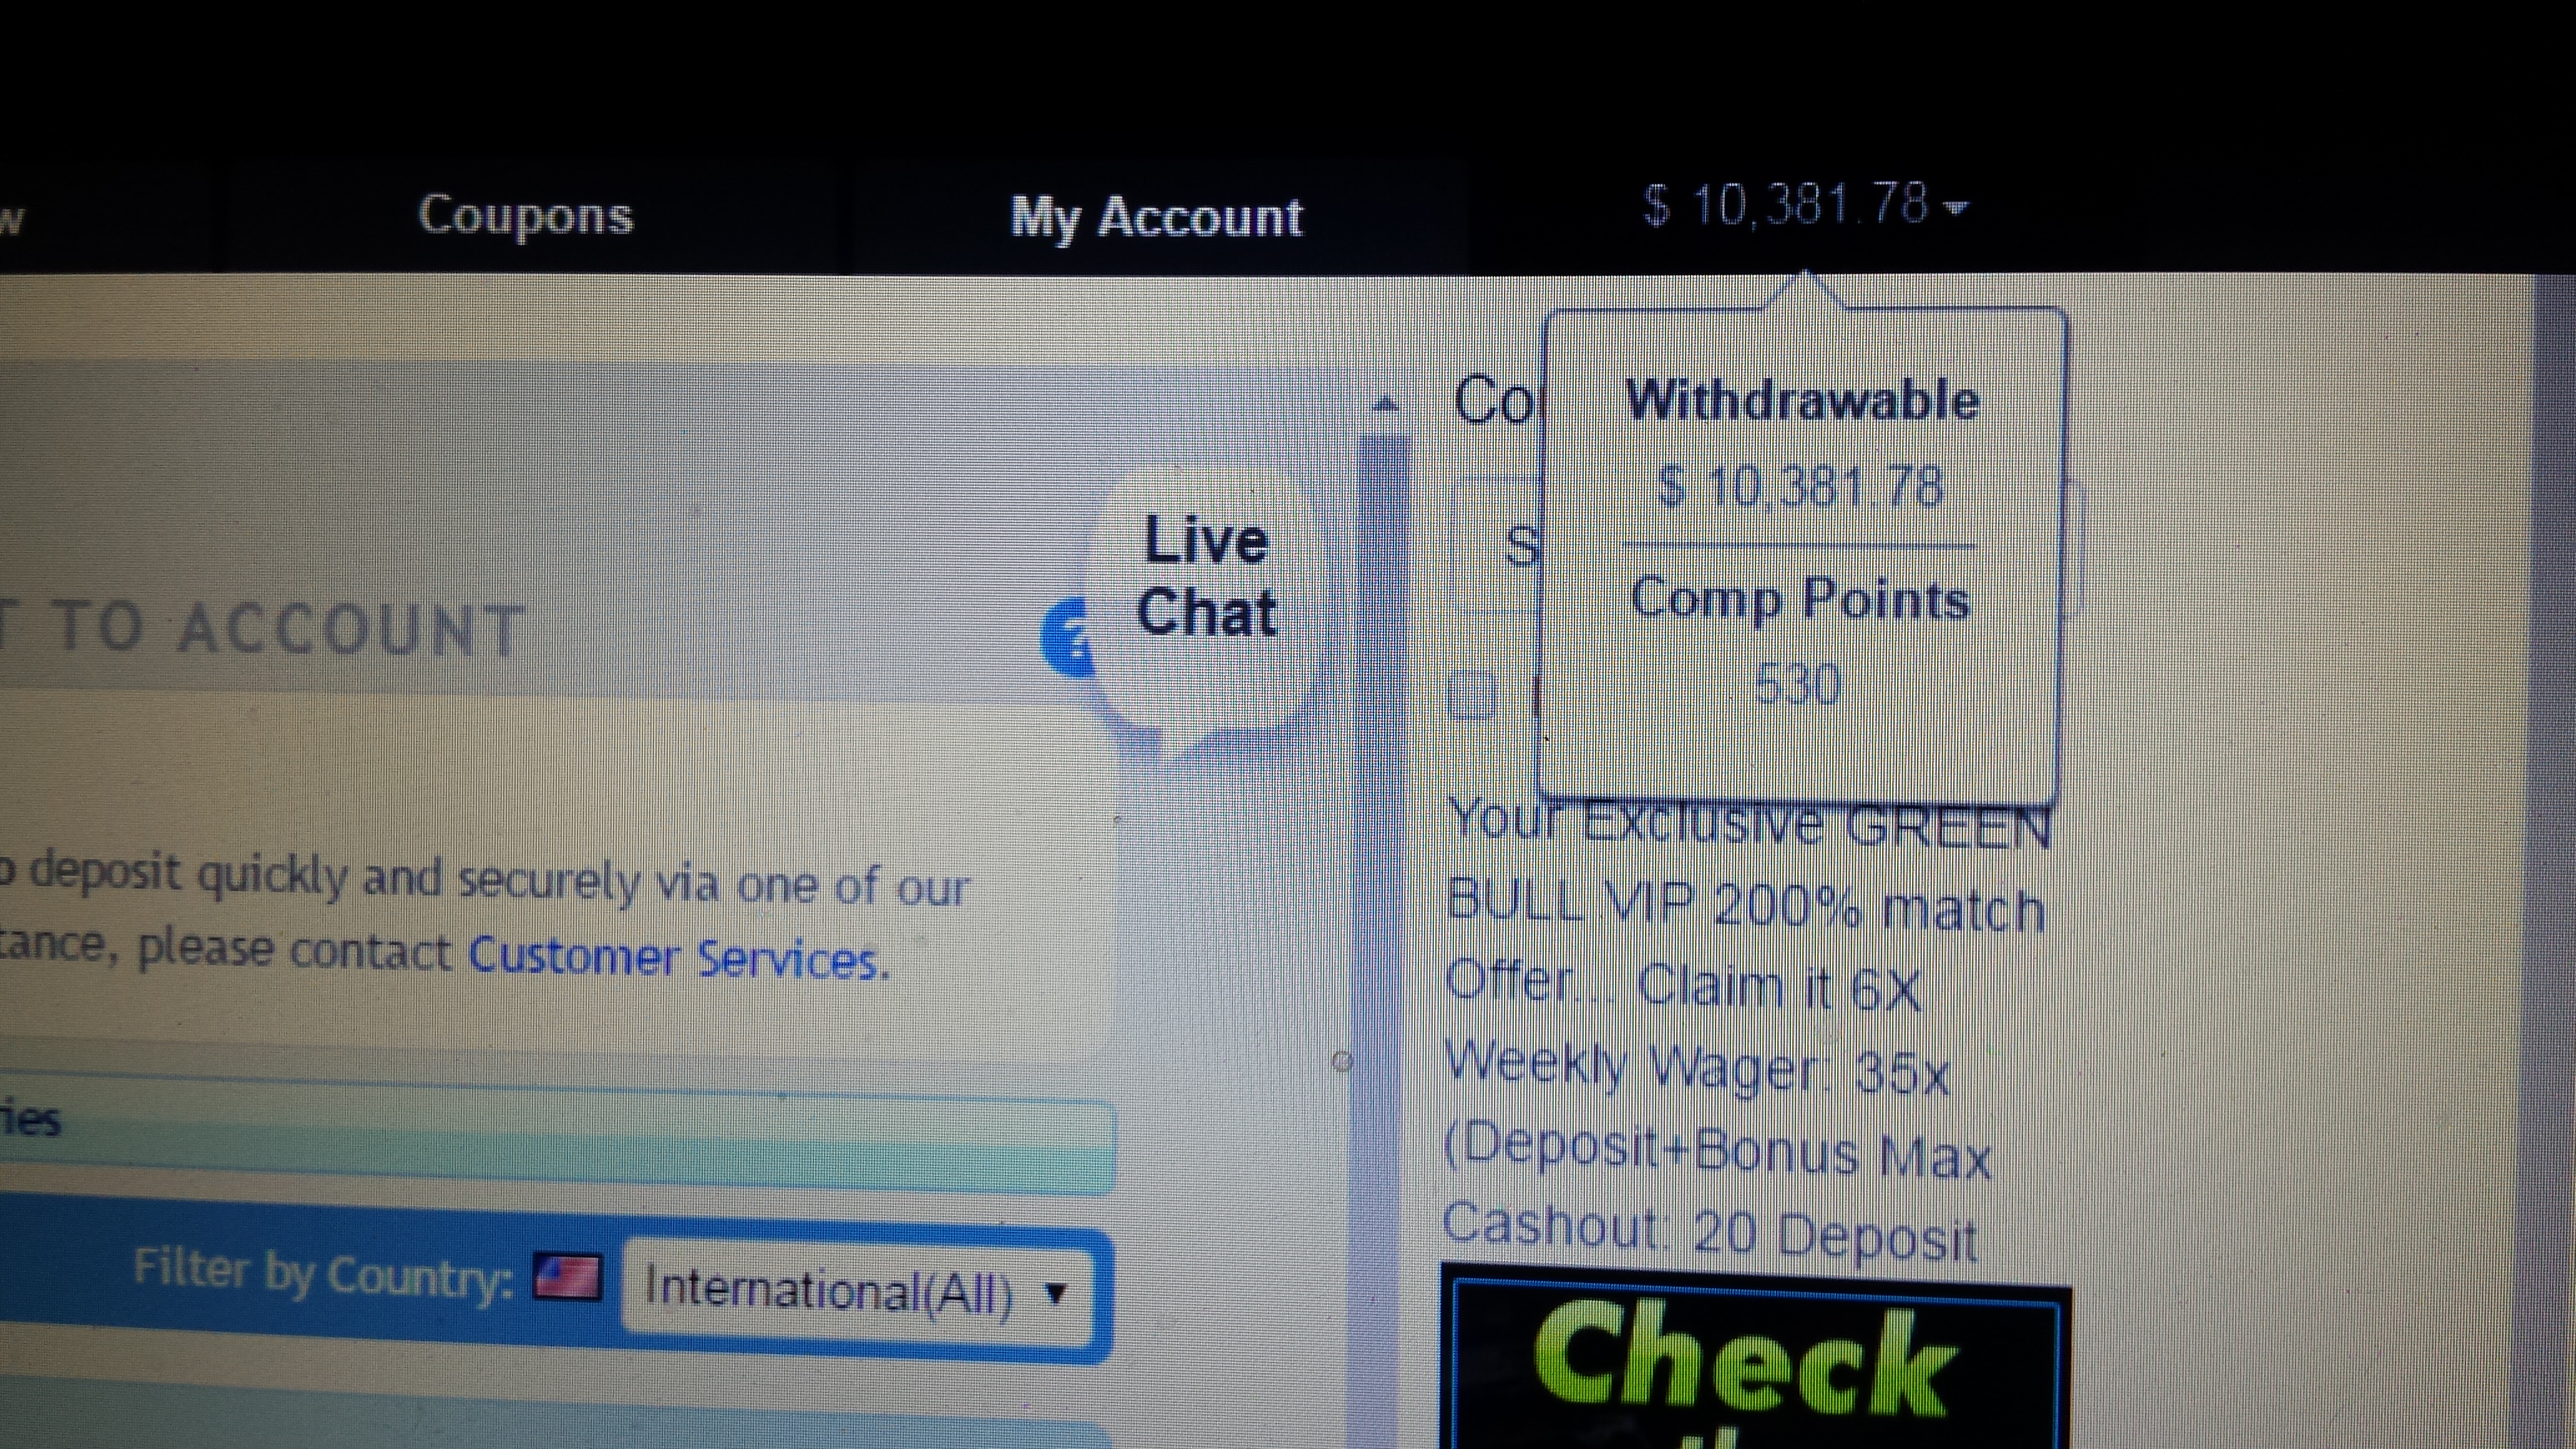 A screen shot of my winnings Raging Bull Casino refuses to pay.